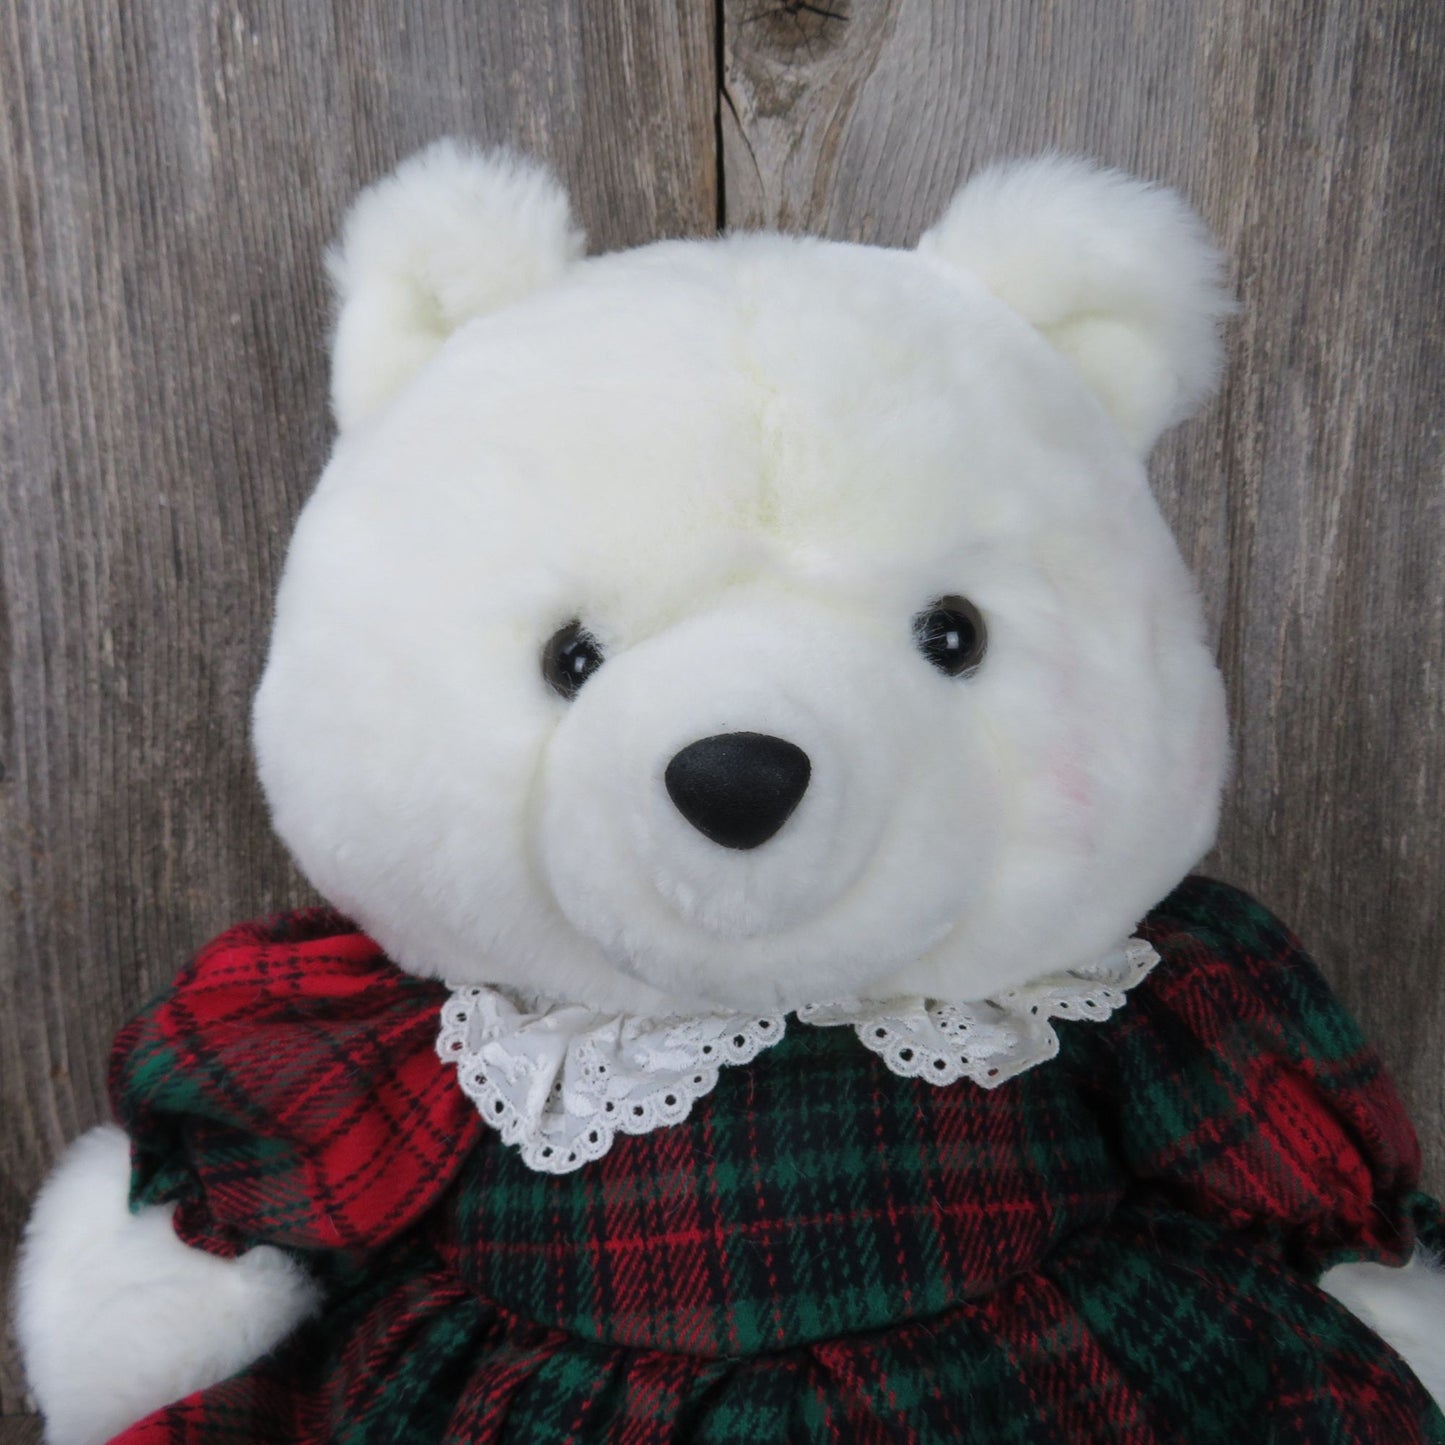 White Christmas Bear Plush Jingle Bear Plaid Red and Green Dress Stuffed Animal Emporium Capwell